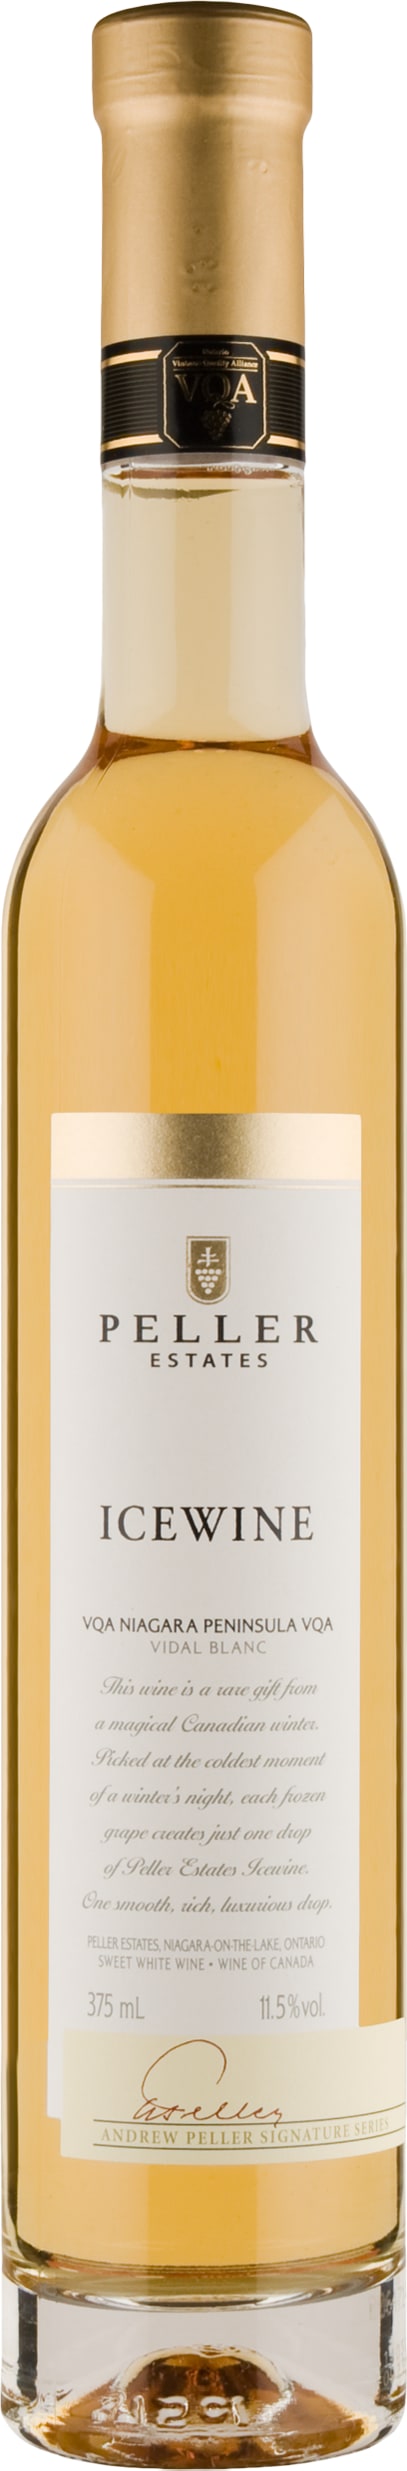 Peller Family Estates Vidal Icewine 375cl 2018 37.5cl - Buy Peller Family Estates Wines from GREAT WINES DIRECT wine shop